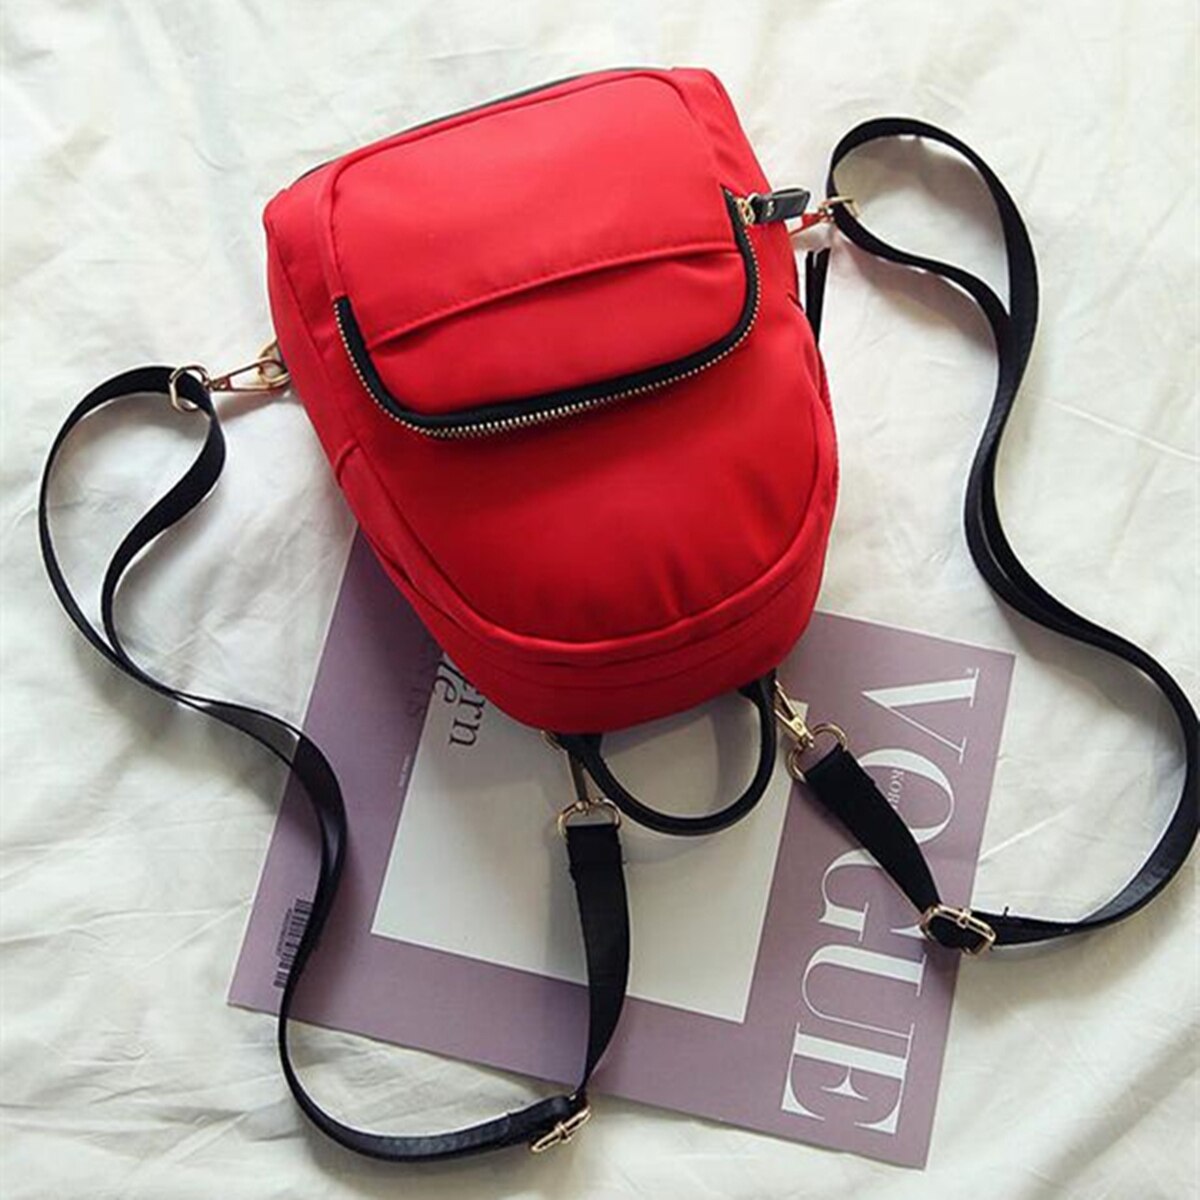 Women Backpack Nylon Shoulder School Travel Bag Small Casual Rucksack(Red) - ebowsos